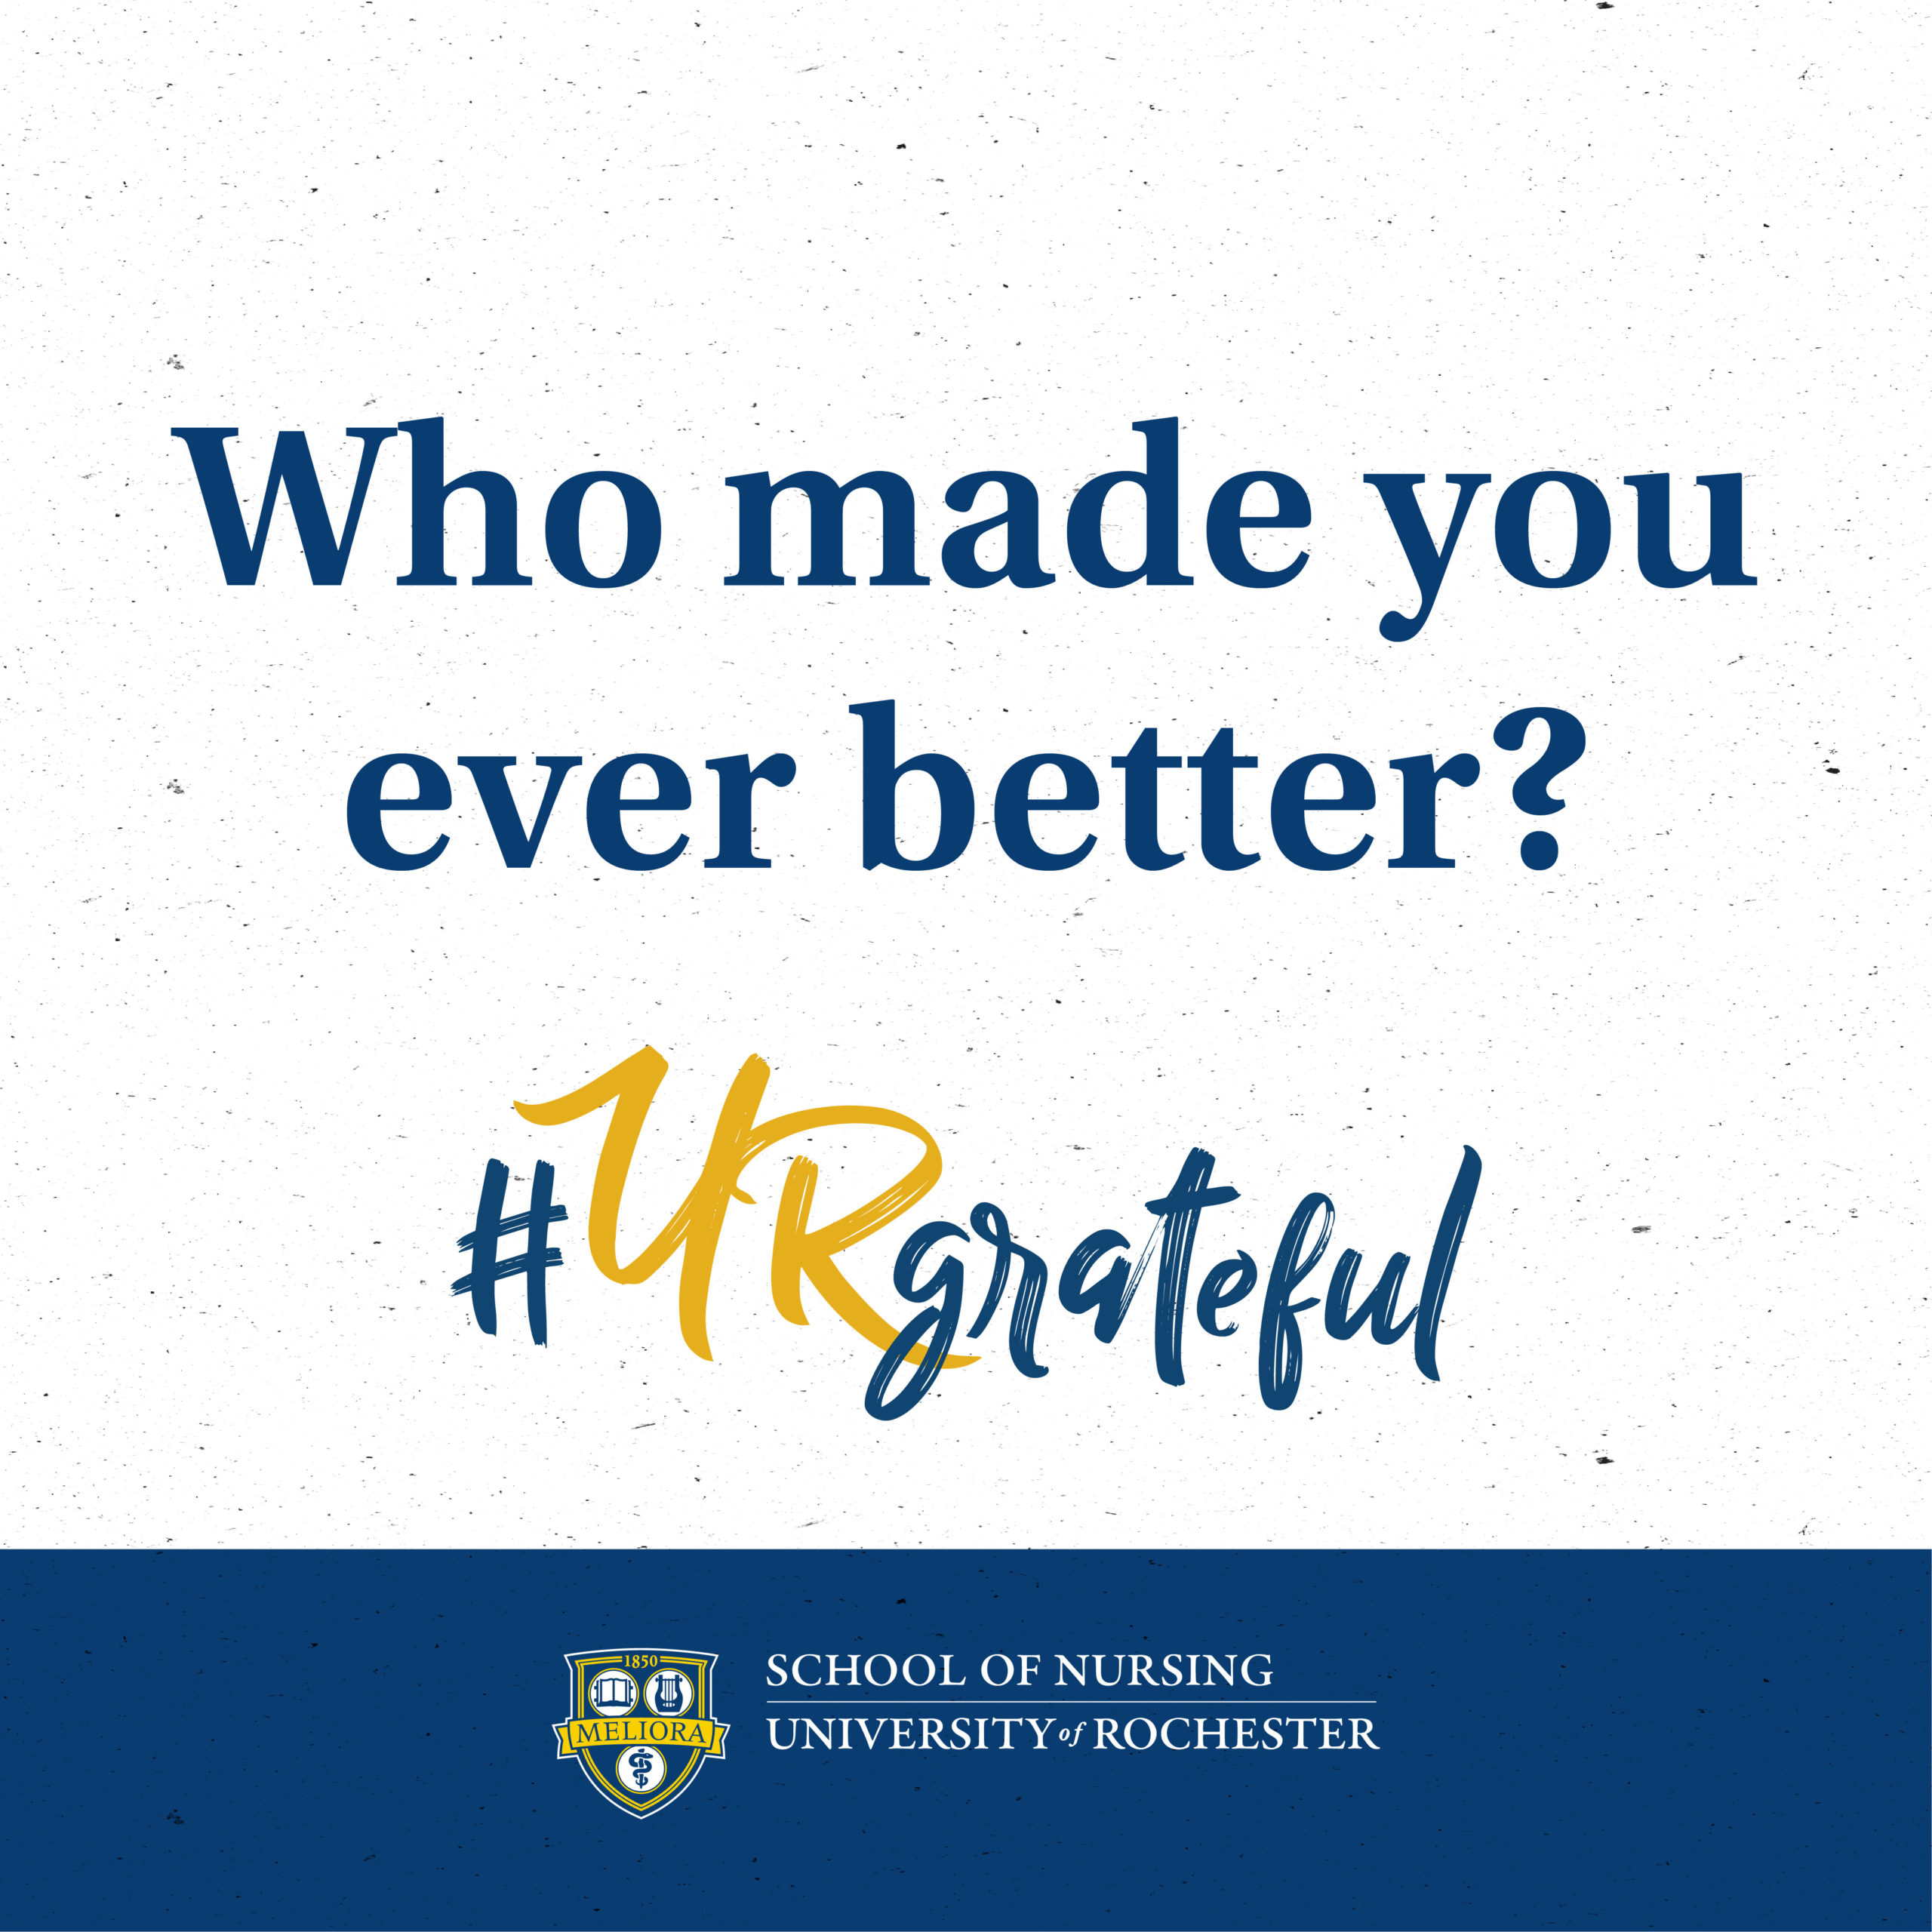 Who made you ever better? #URgrateful - School of Nursing